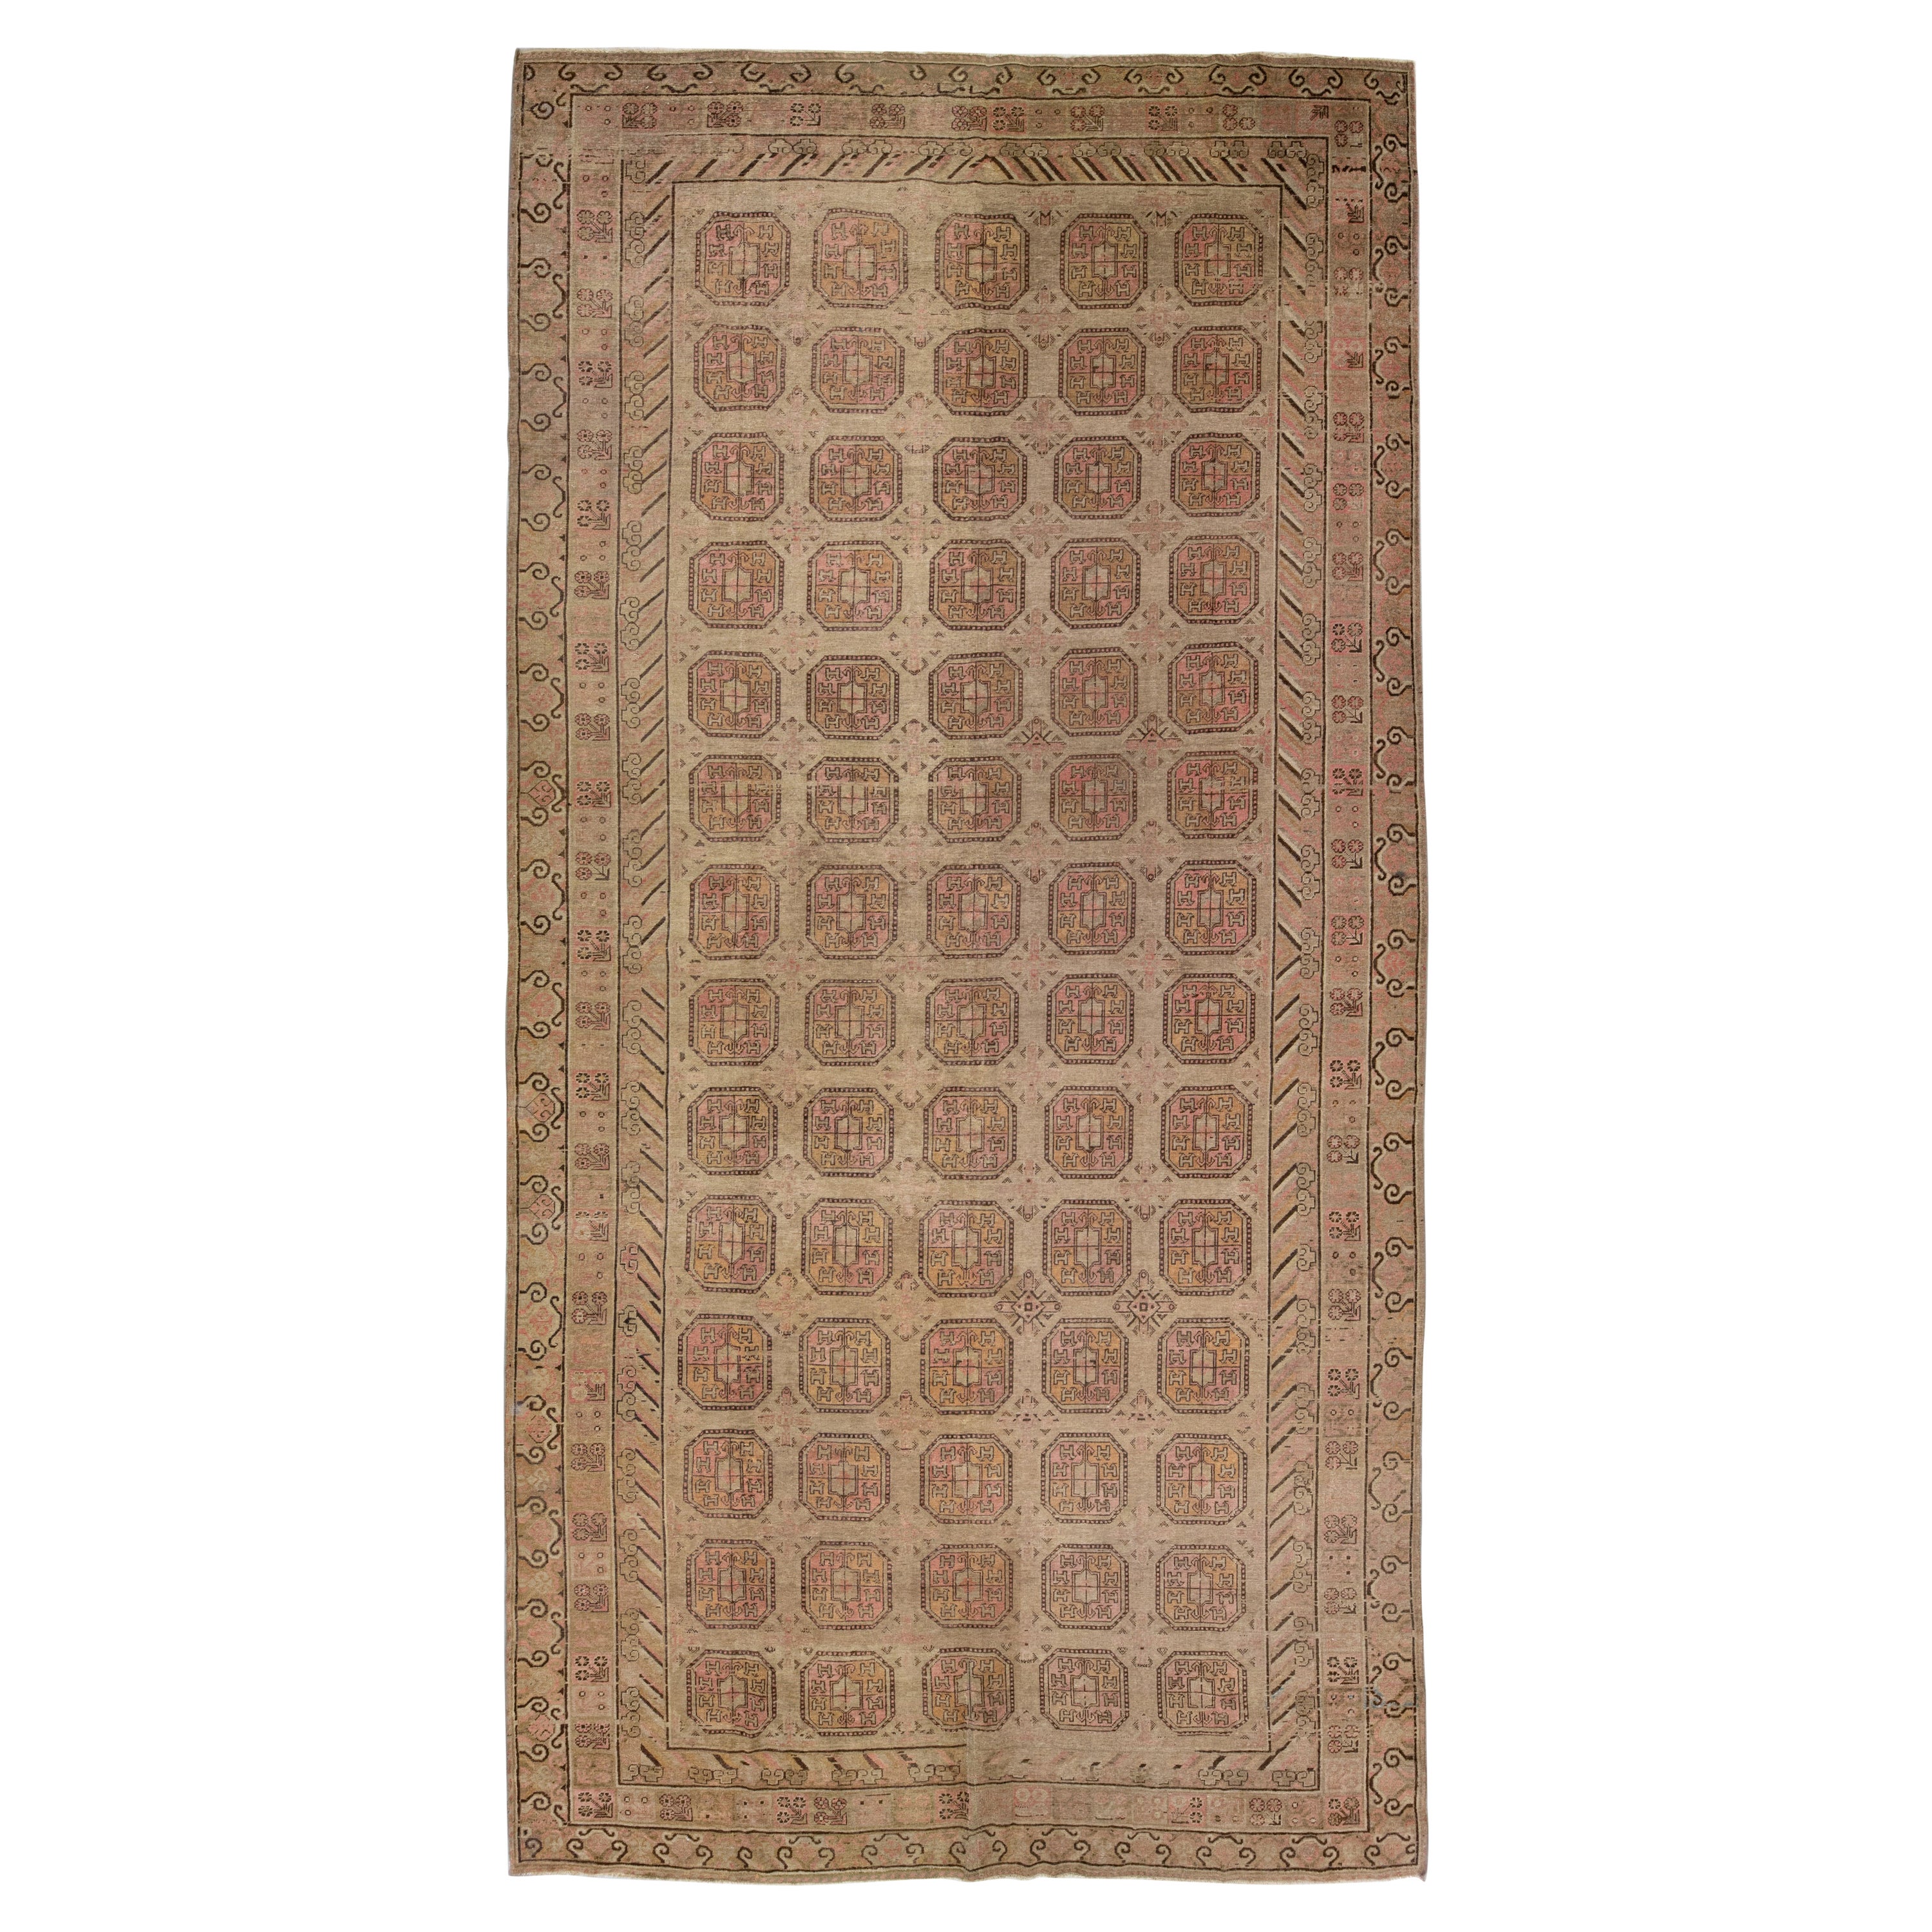 1900s Antique Brown Handmade Khotan Wool Rug with Geometric Pattern